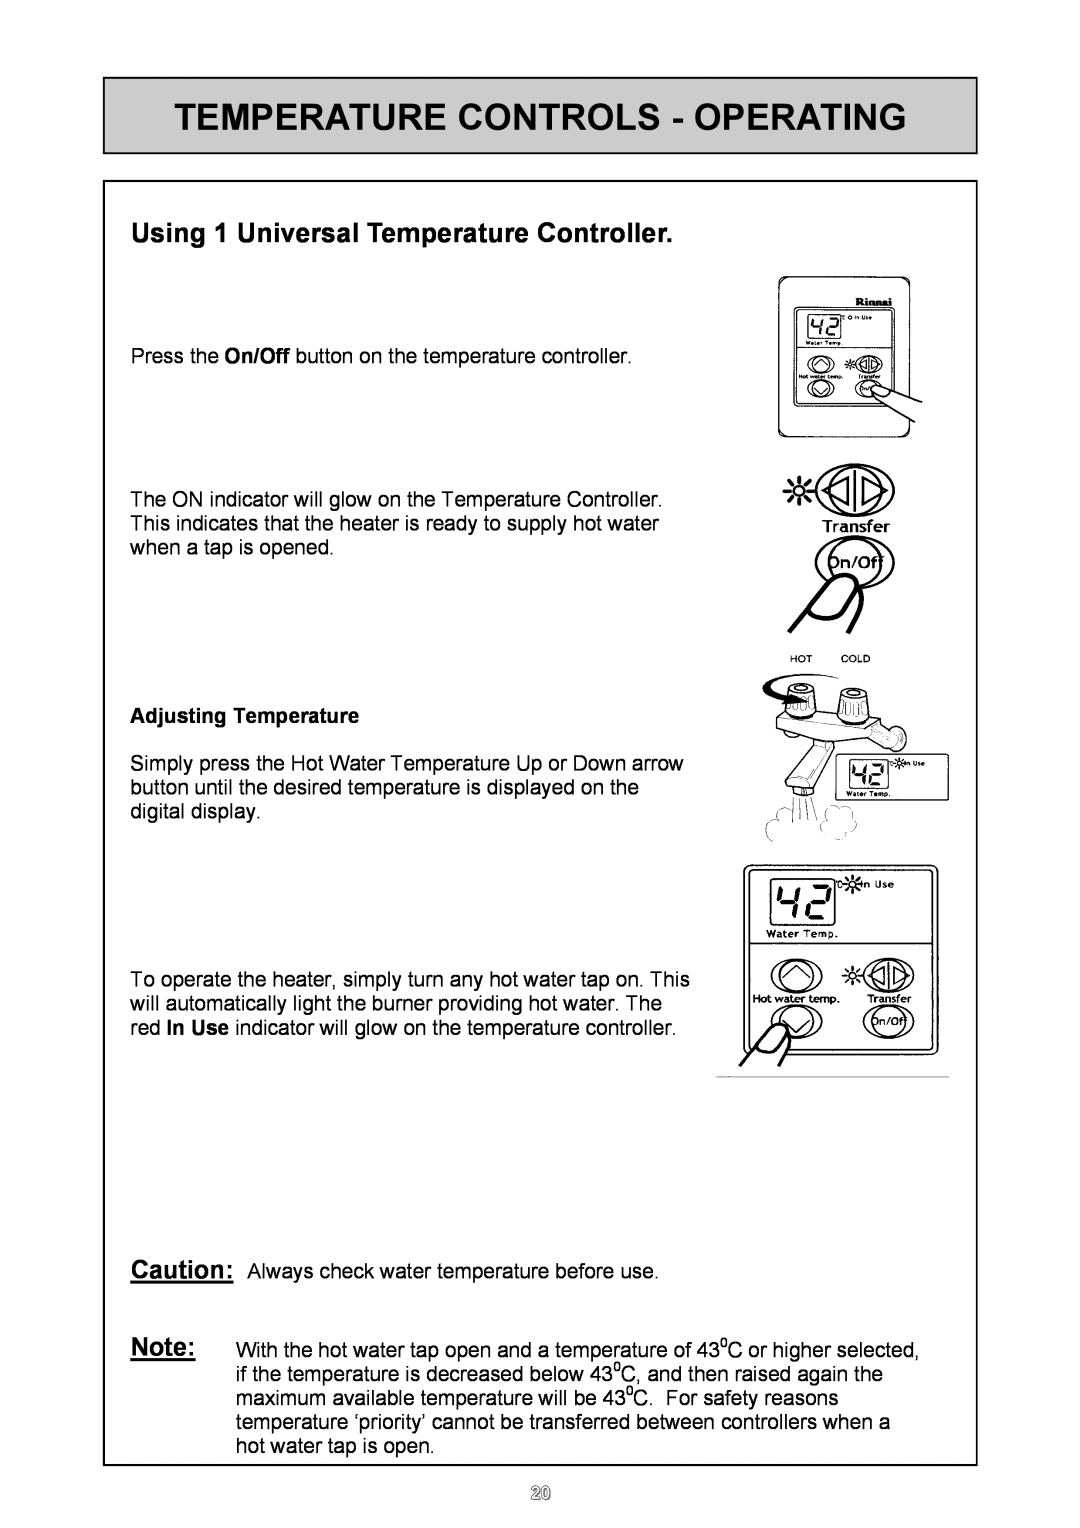 Rinnai 24e user manual Using 1 Universal Temperature Controller, Adjusting Temperature, Temperature Controls - Operating 